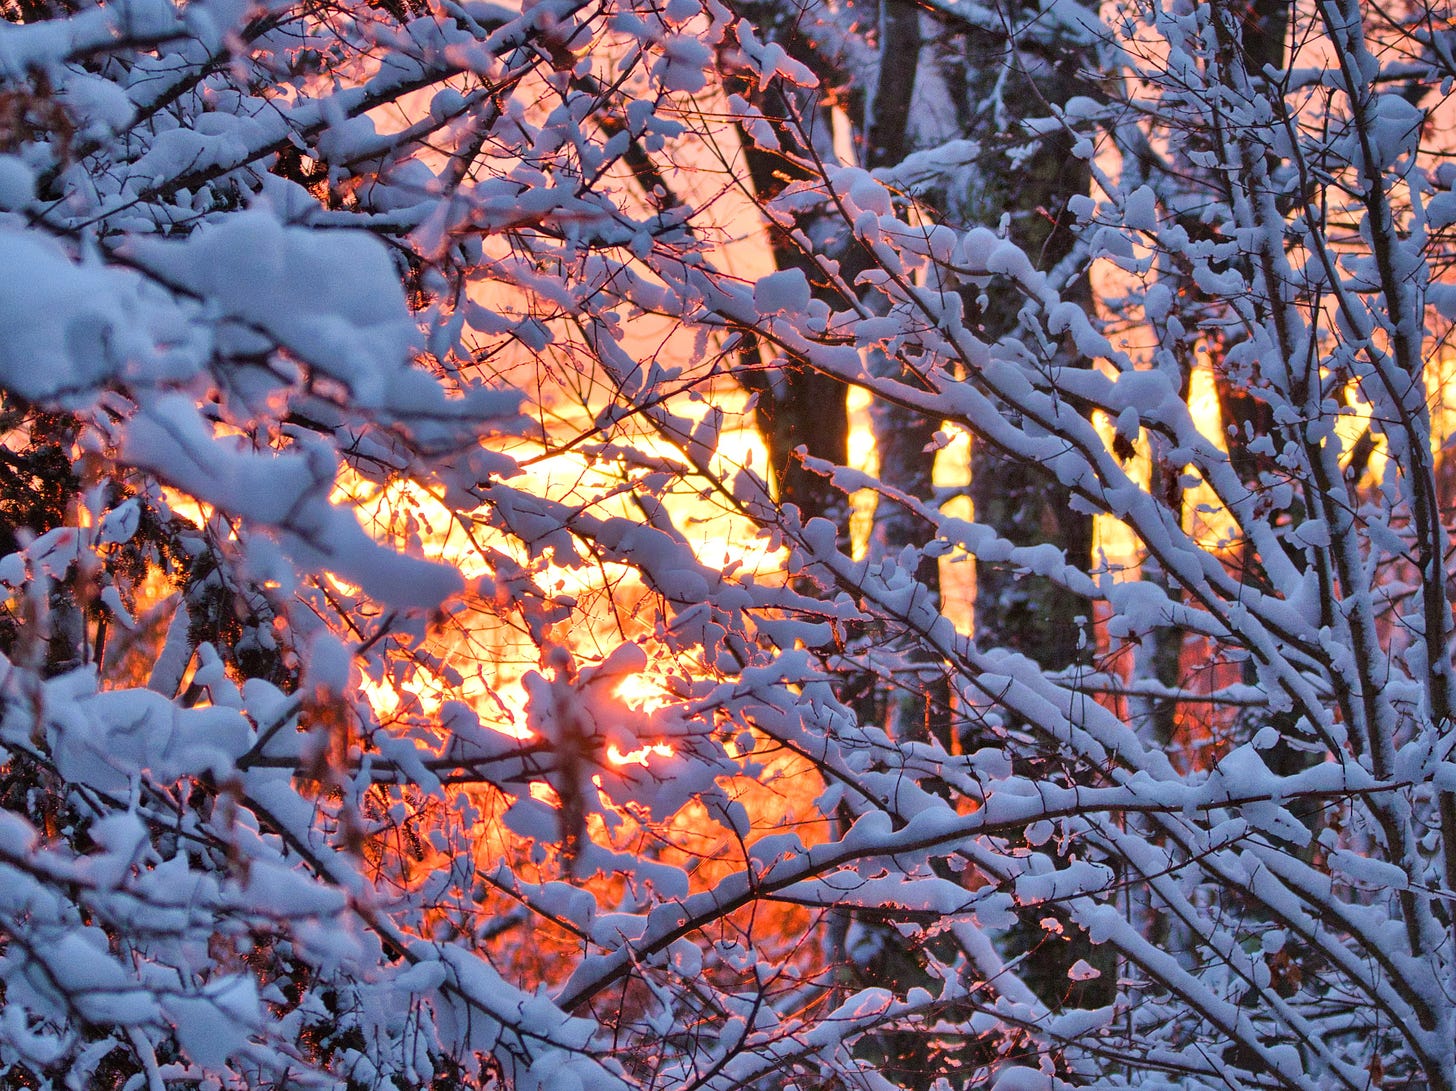 Sunrise through snowy branches